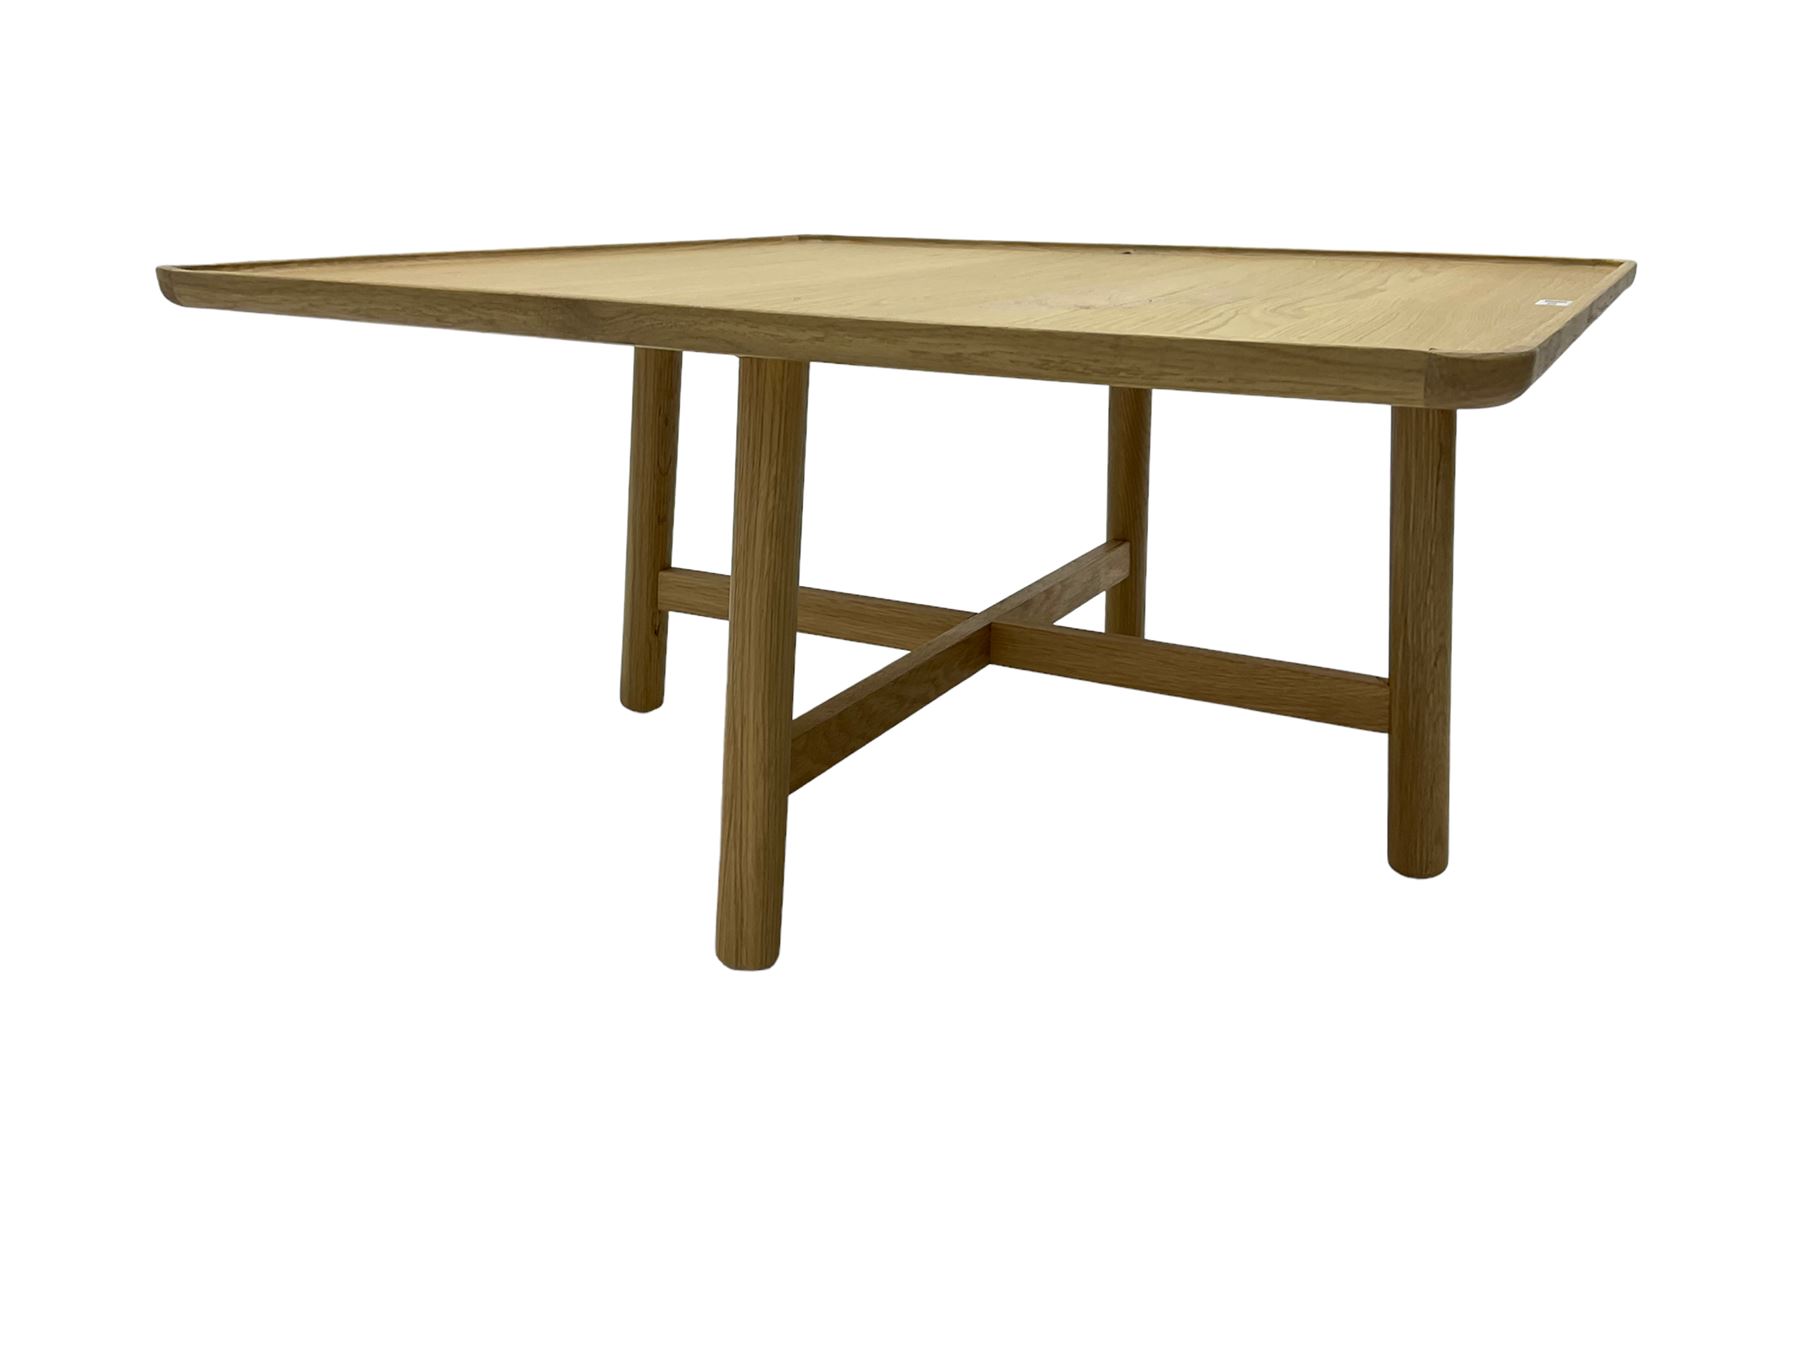 Contemporary square oak table - Image 6 of 6